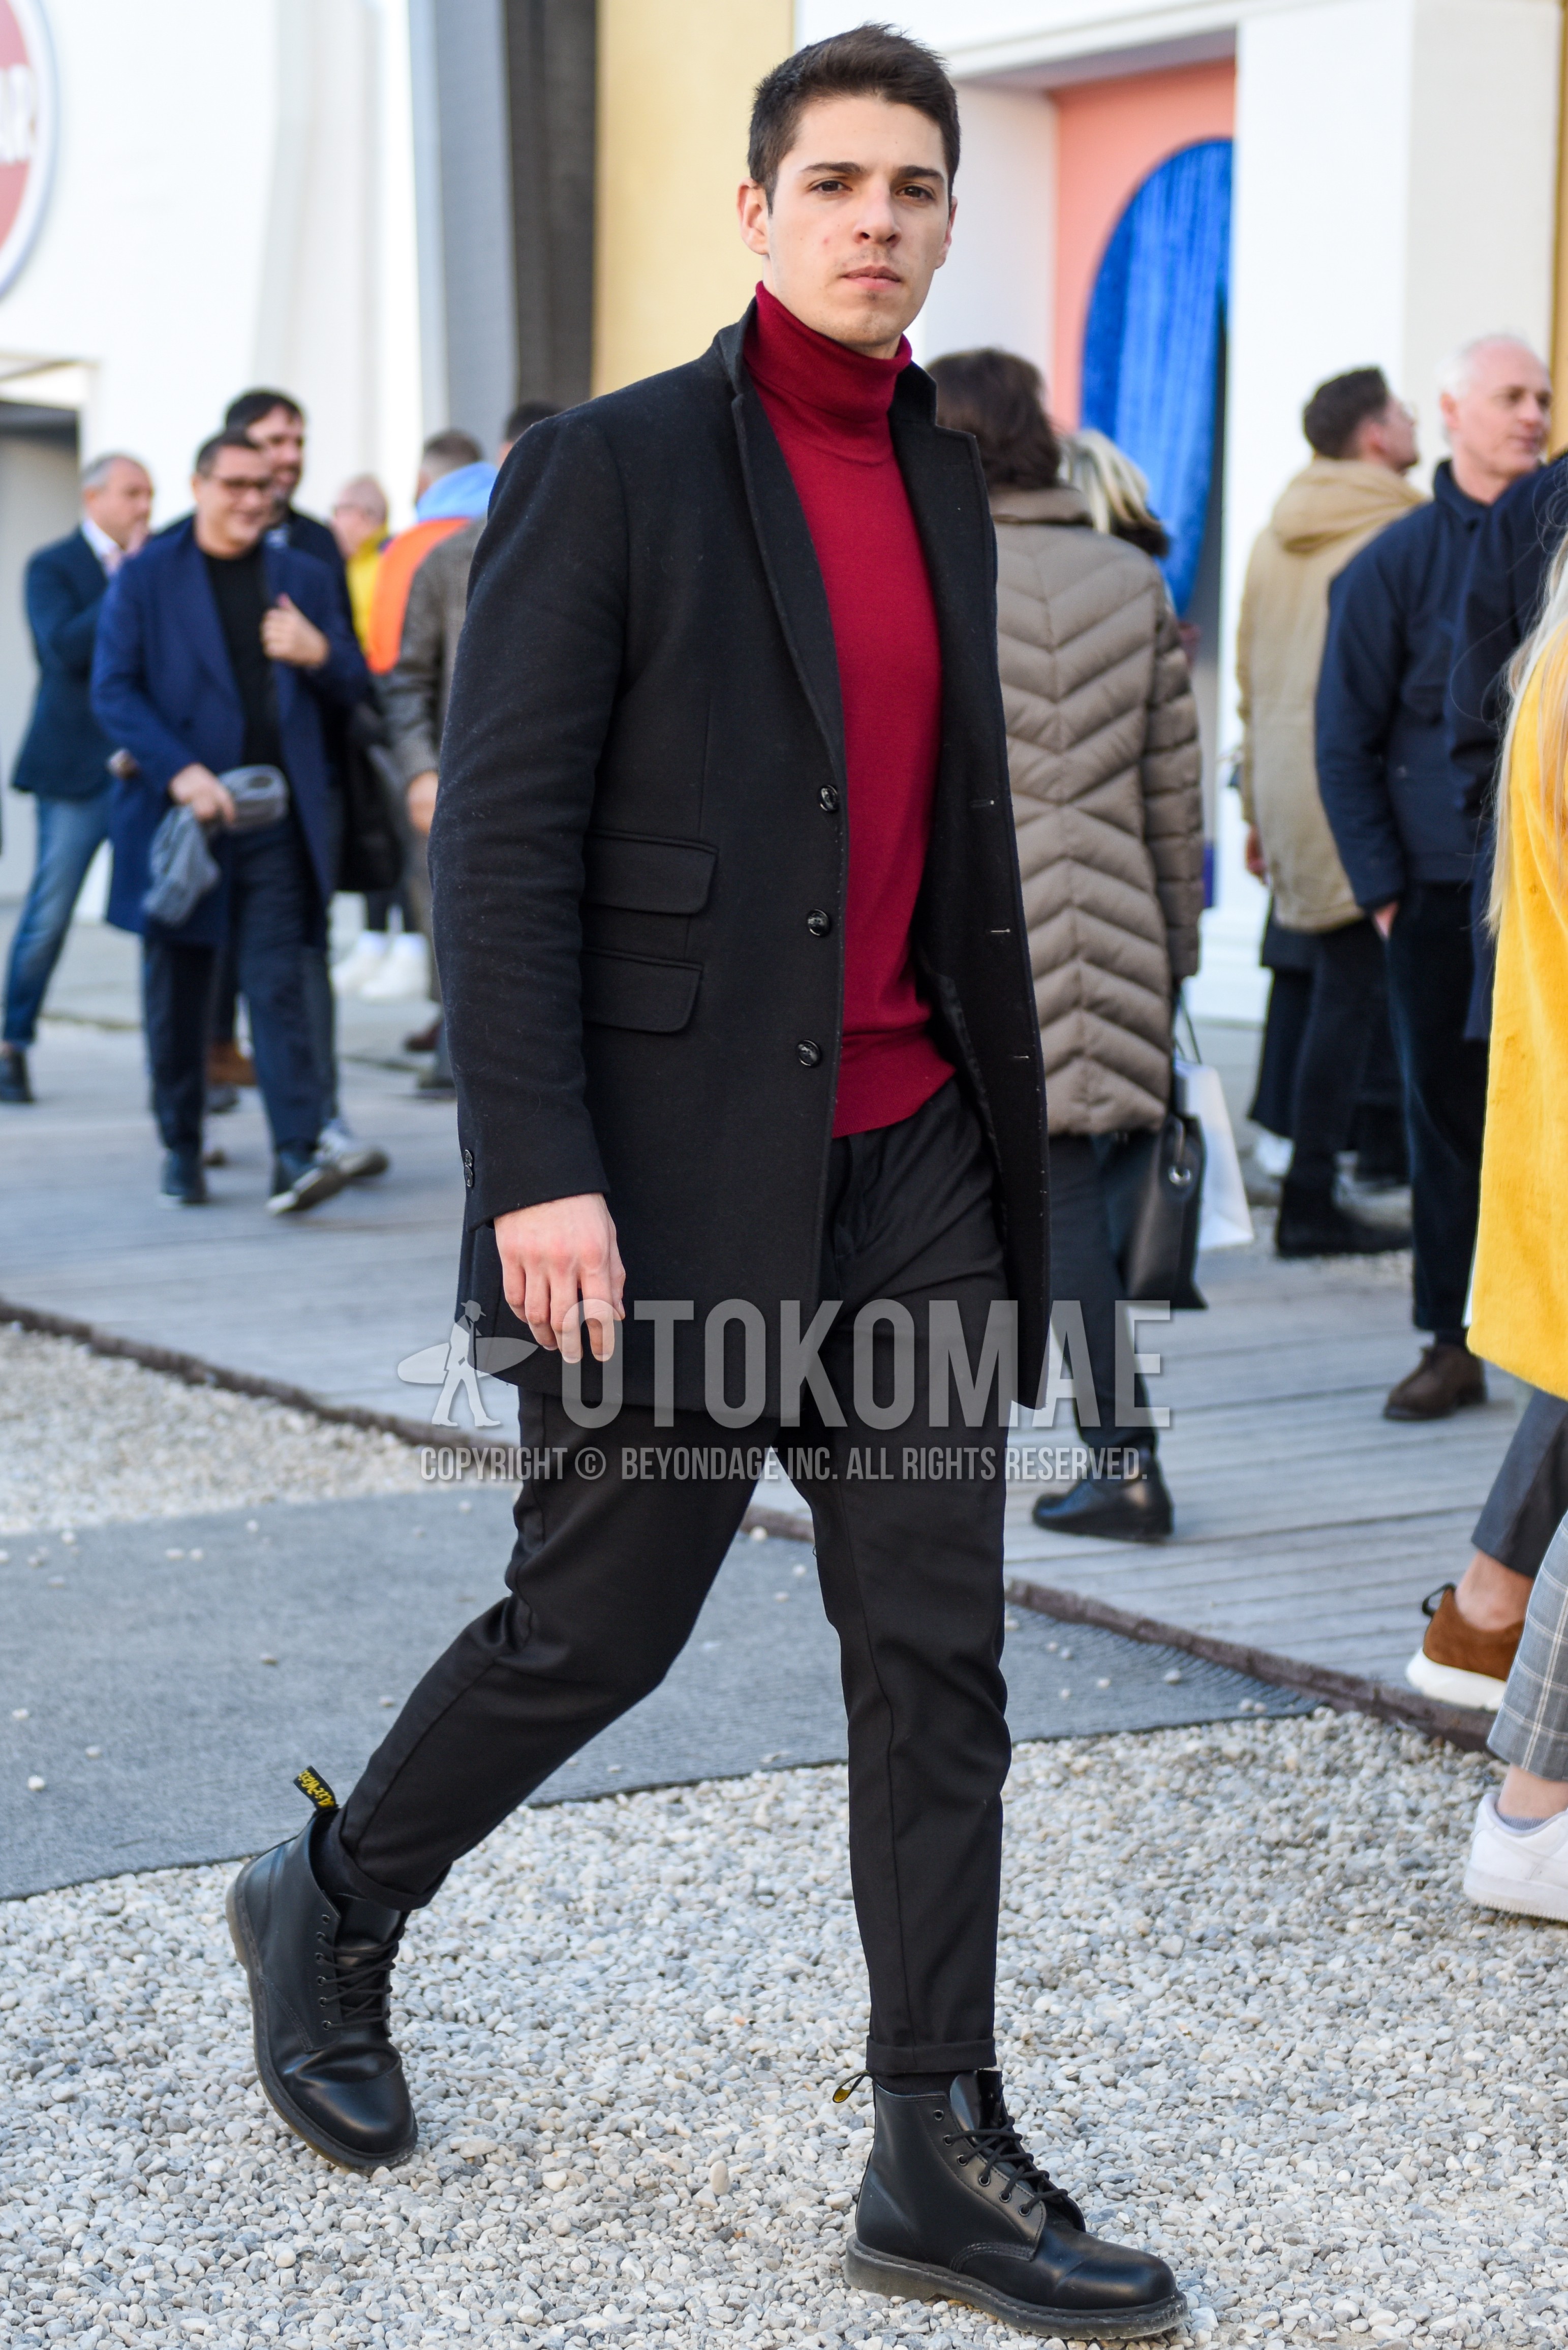 Men's autumn winter outfit with black plain chester coat, red plain turtleneck knit, gray plain slacks, dark gray plain socks, black work boots.